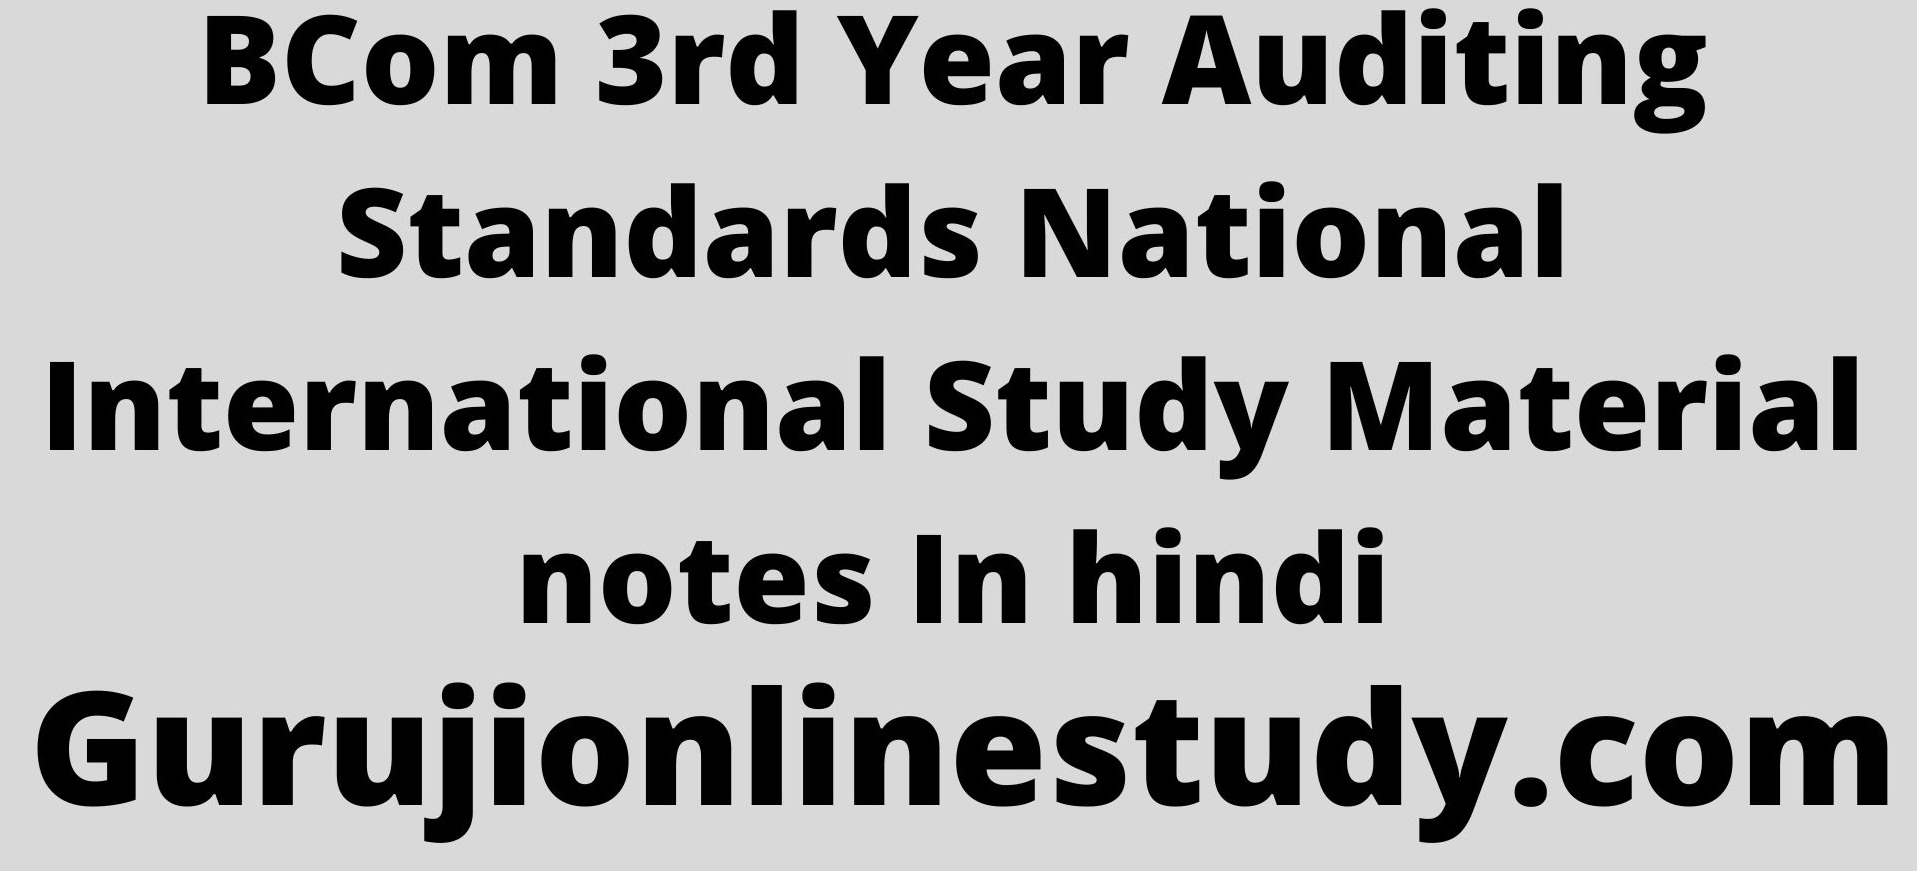 Standards National International